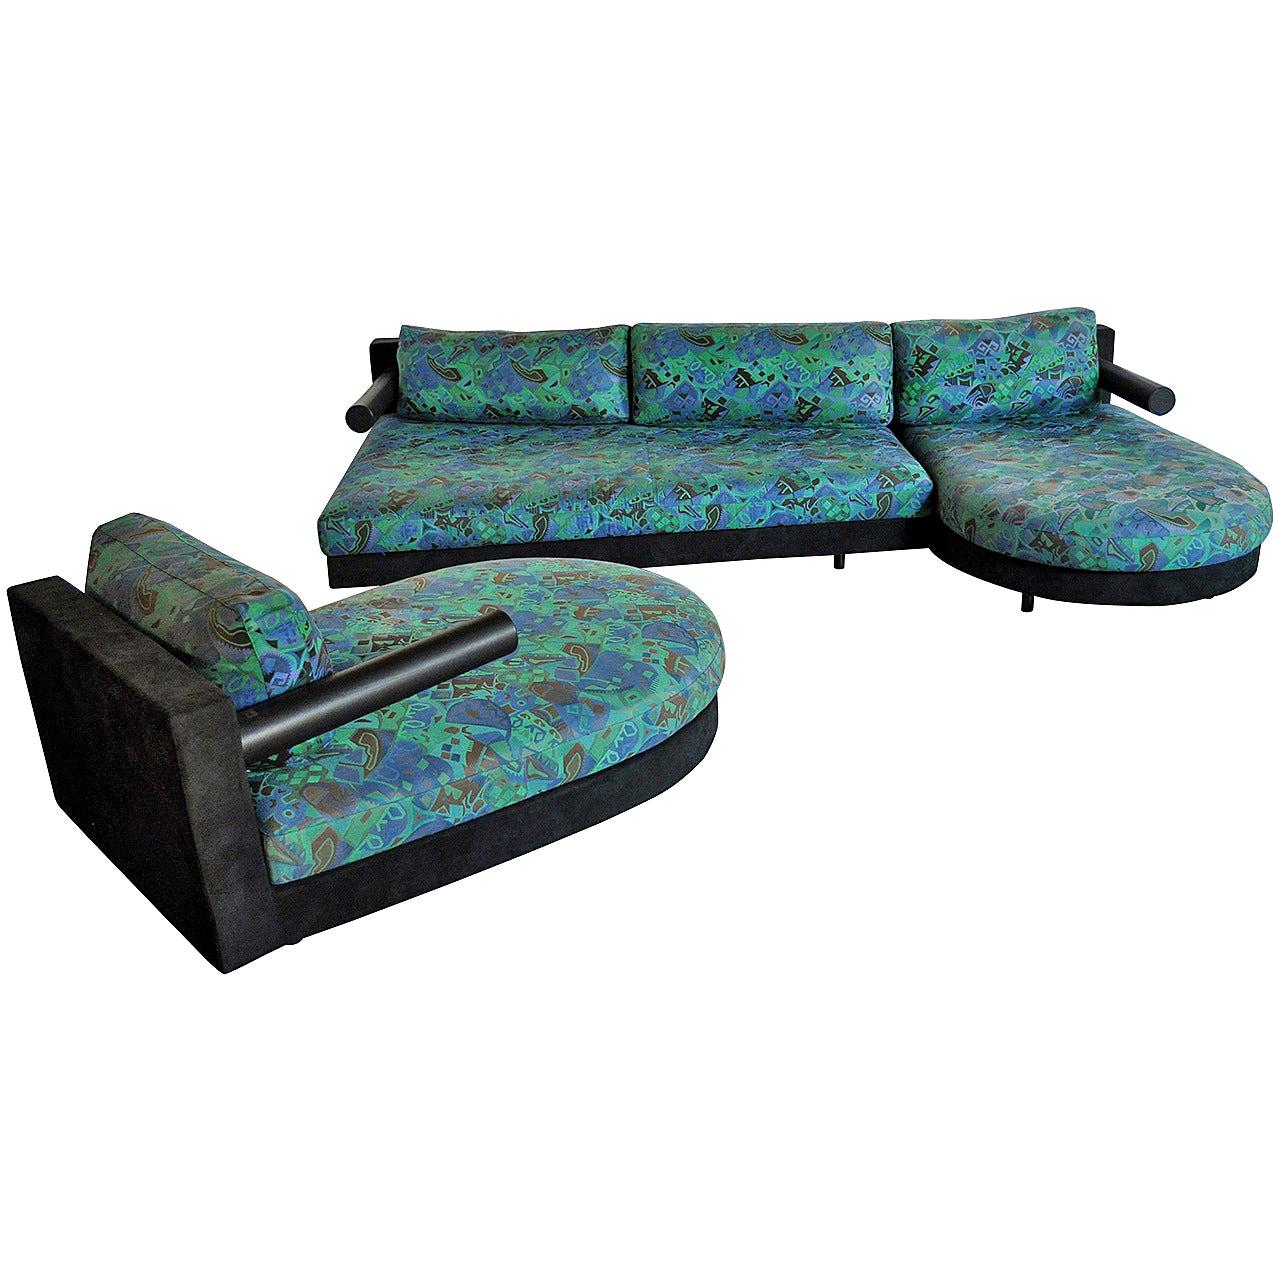 B&B Italia Sity Modular Sectional Sofa and Chaise Lounge Set by Antonio Citterio